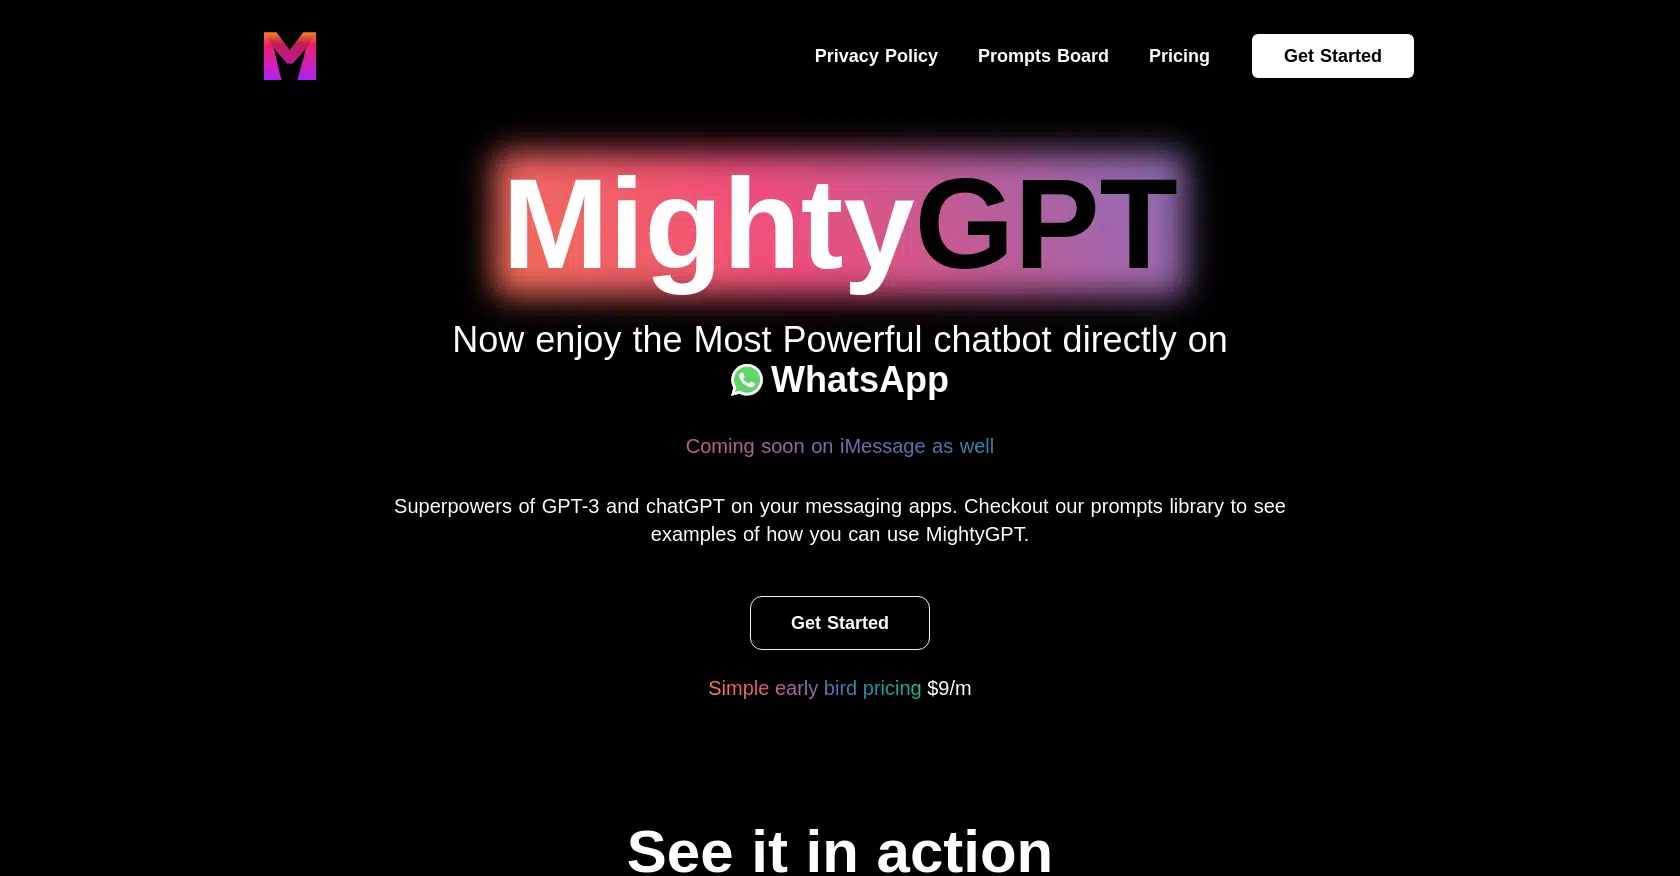 MightyGPTwebsite picture